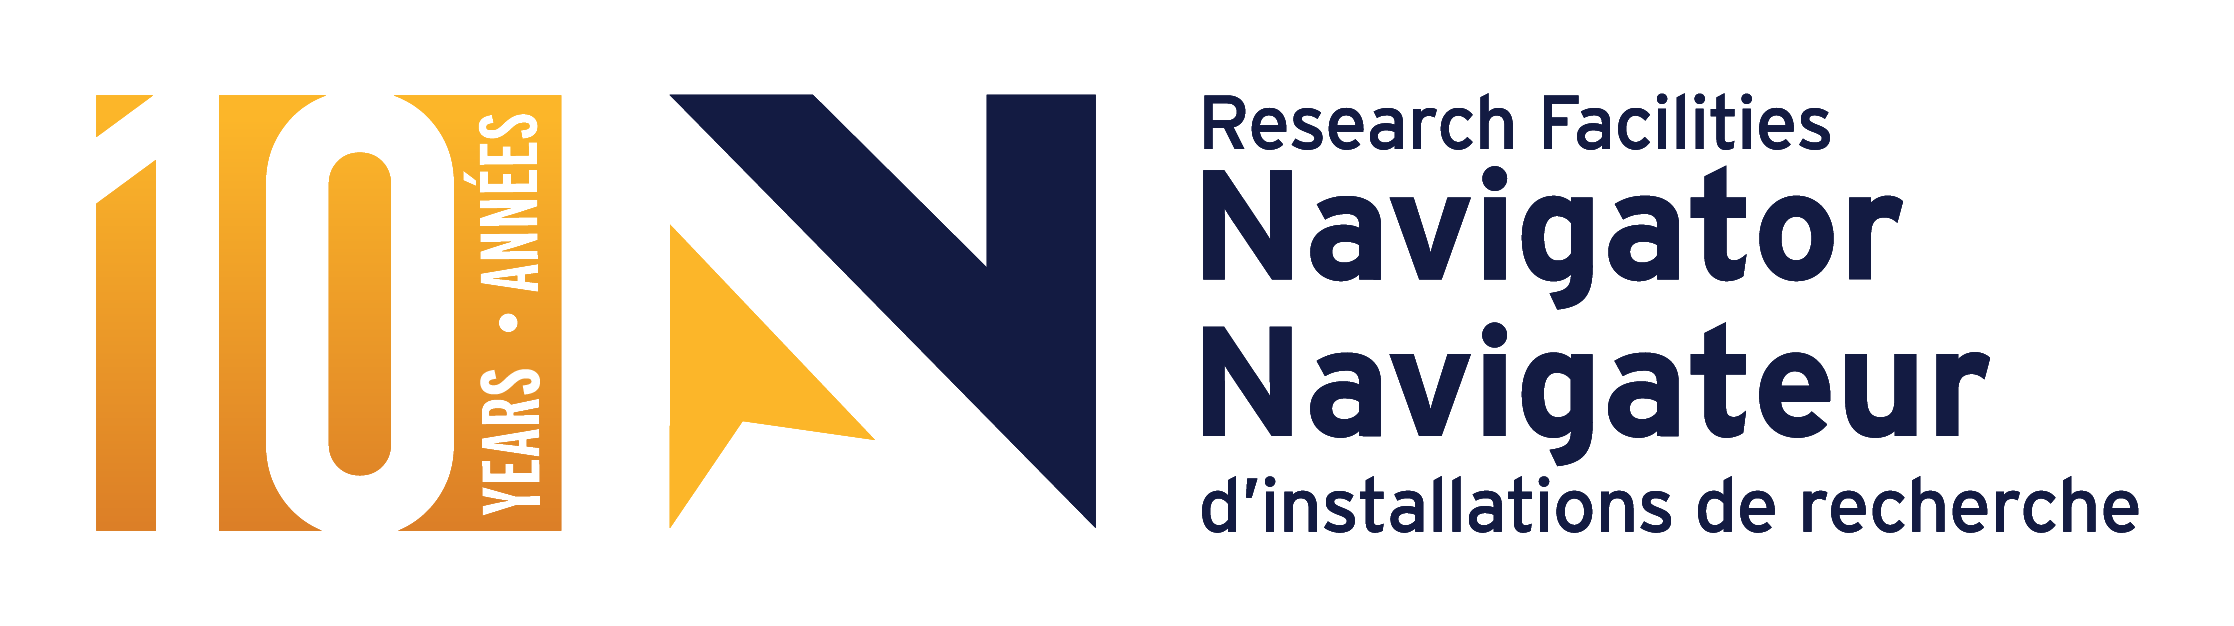 Research Facilities Navigator logo